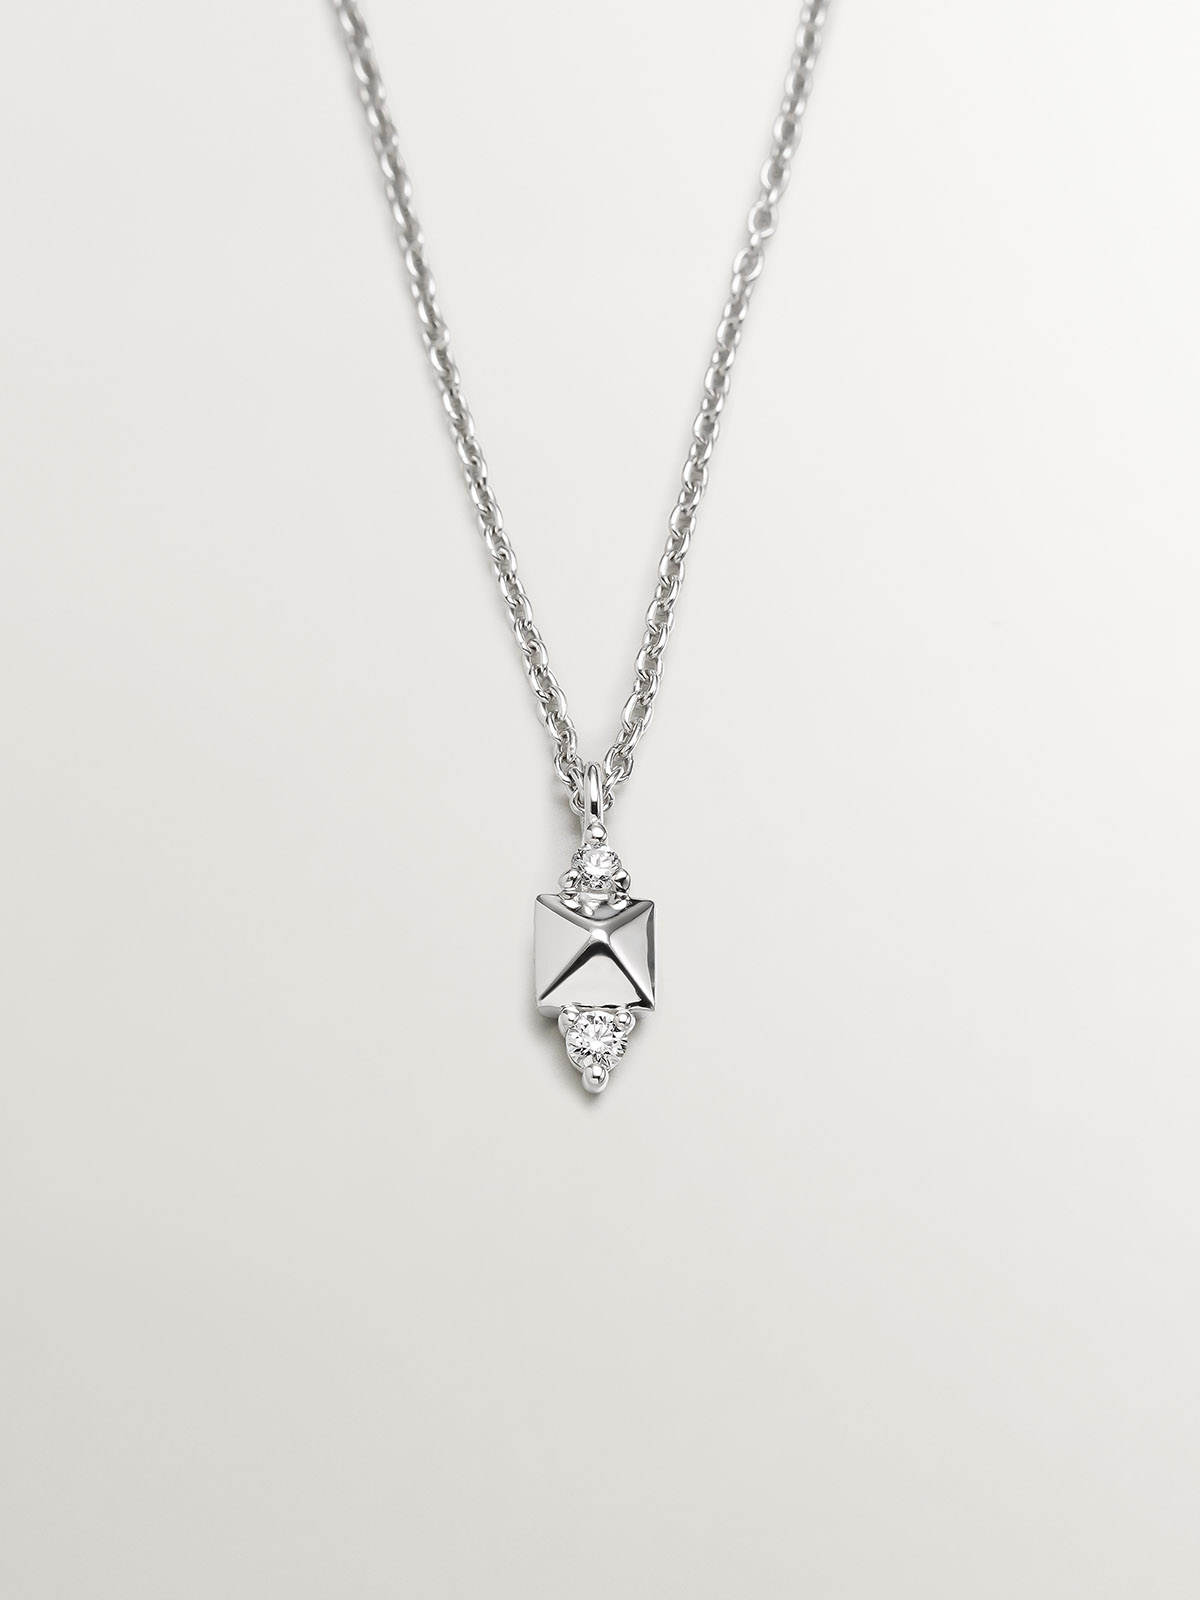 18k white gold pendant with tachuela and diamond